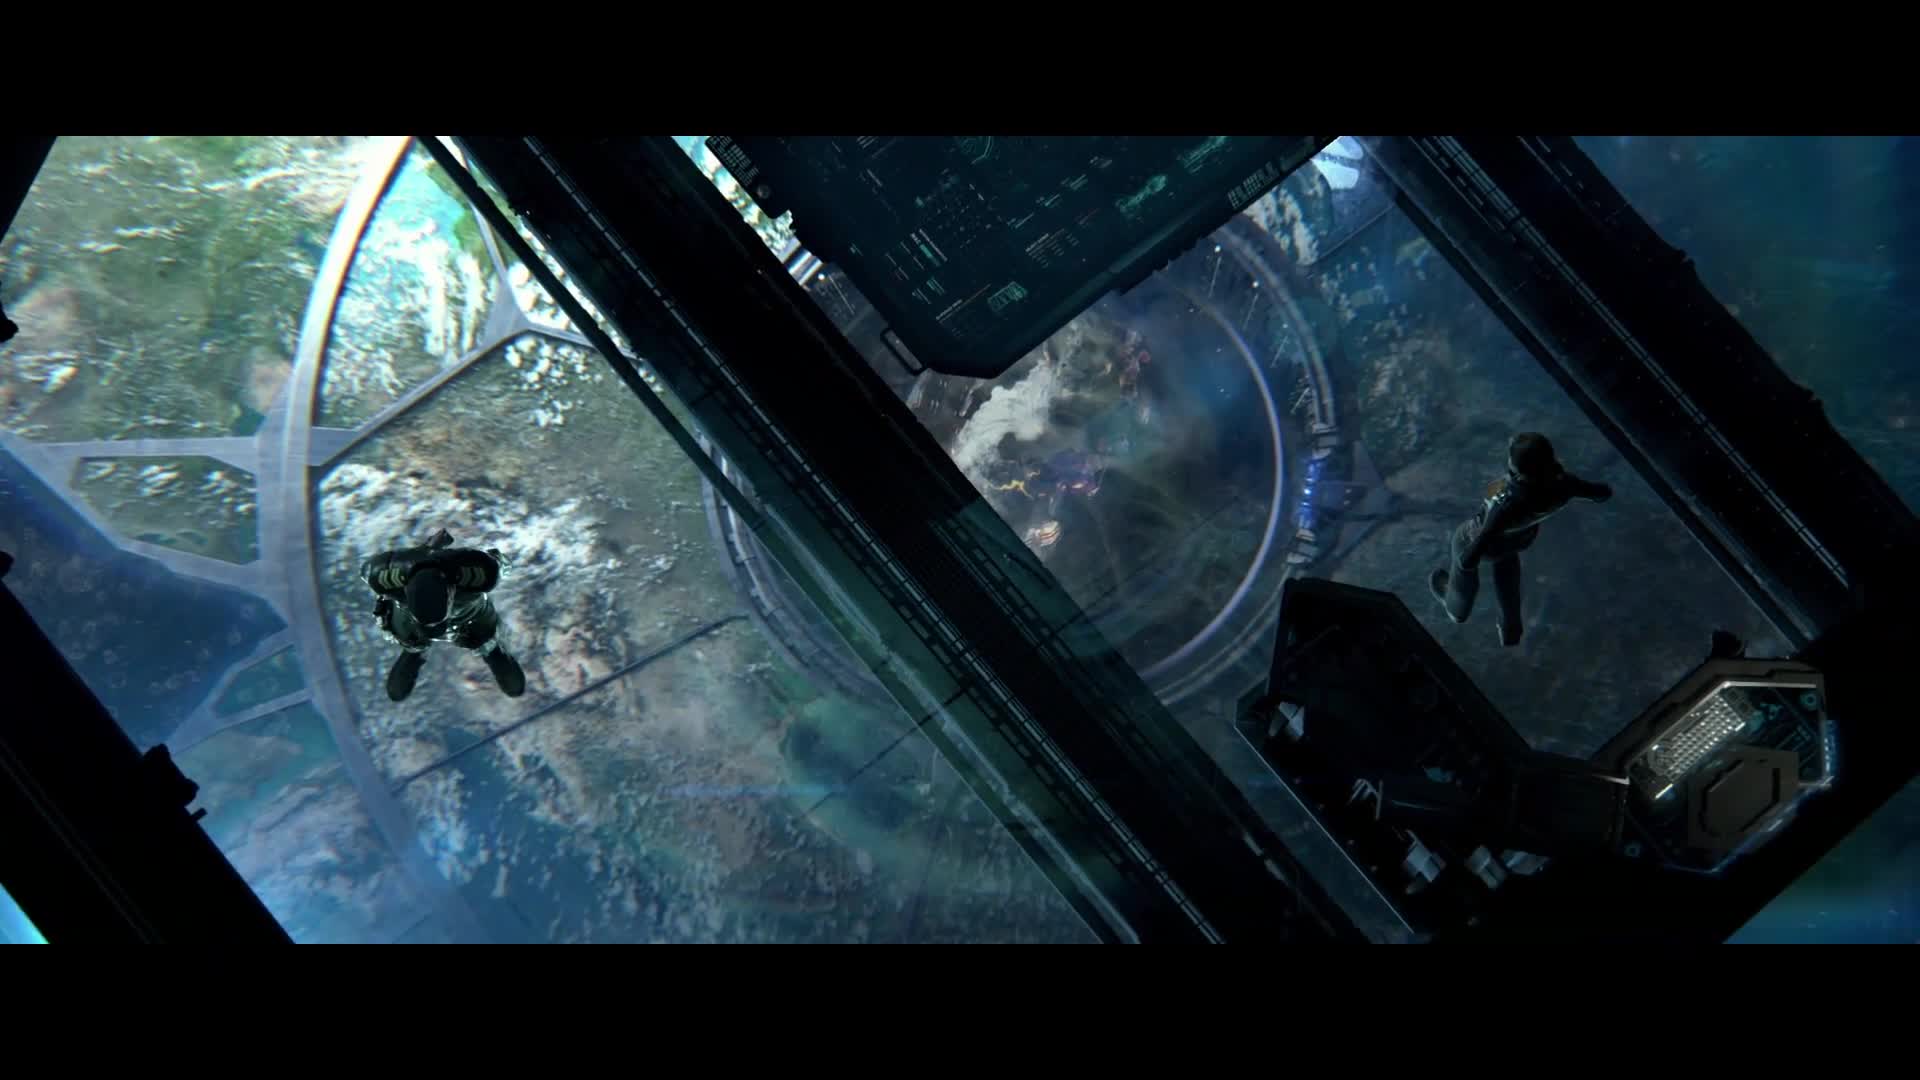 Halo Wars 2 - launch trailer